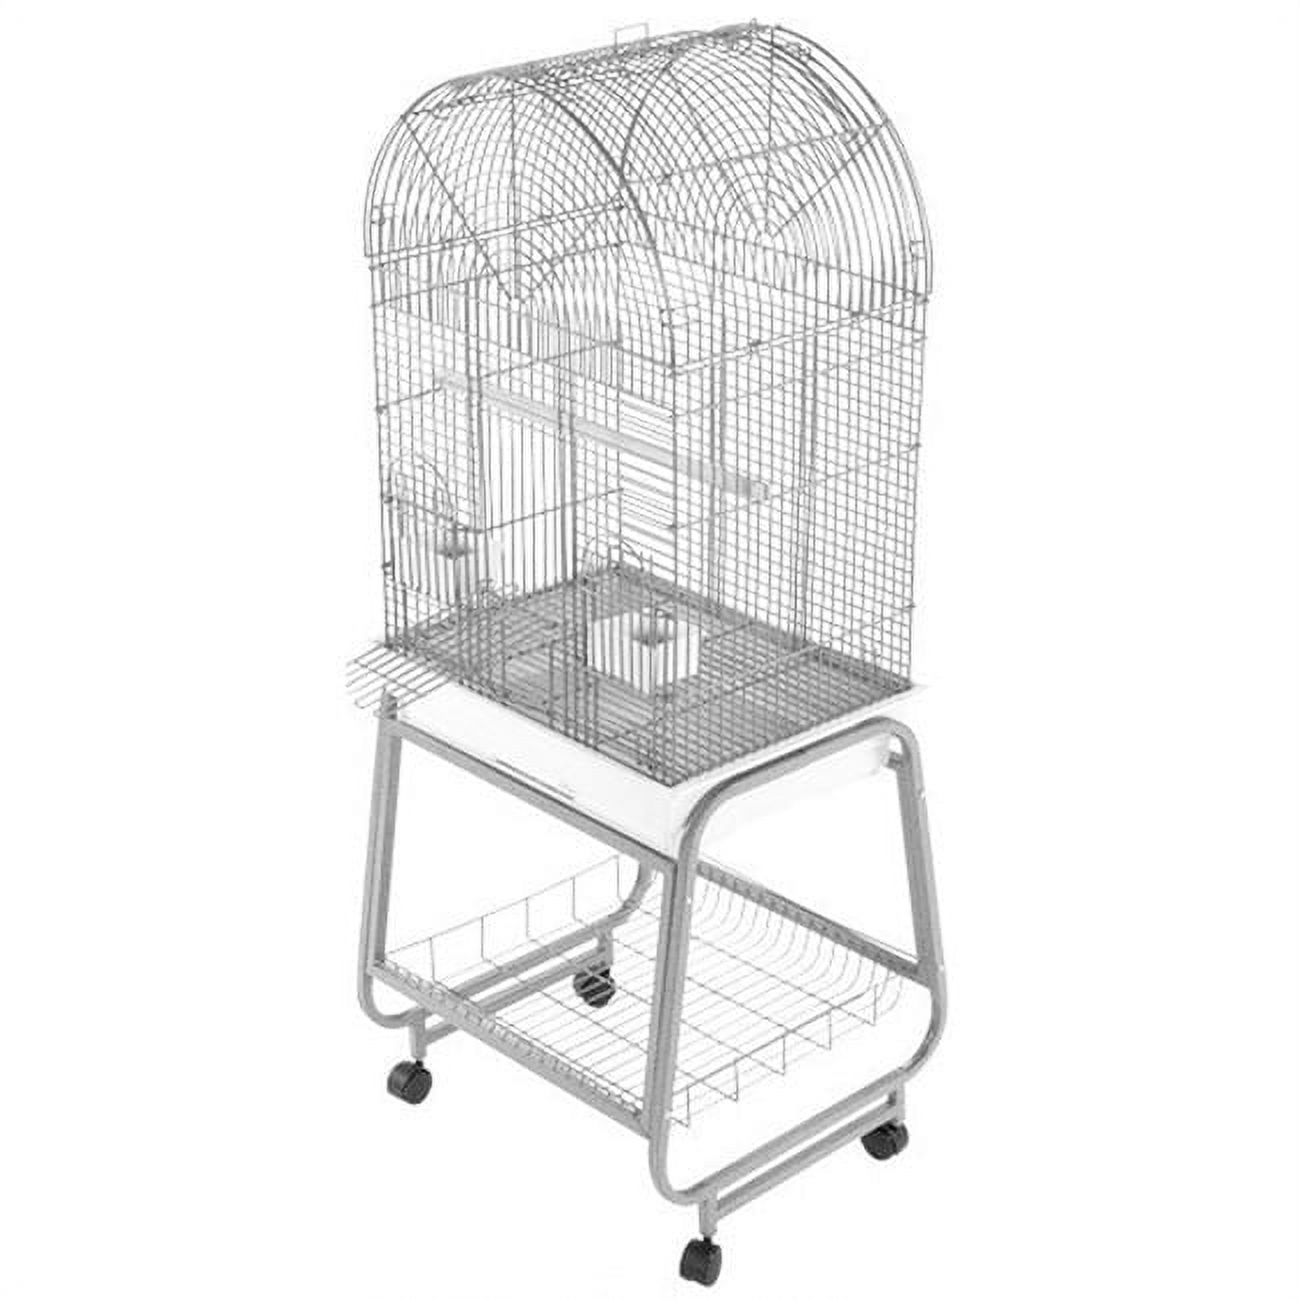 A and E Cage Co. Seneca Dometop Bird Cage-Platinum - image 2 of 4